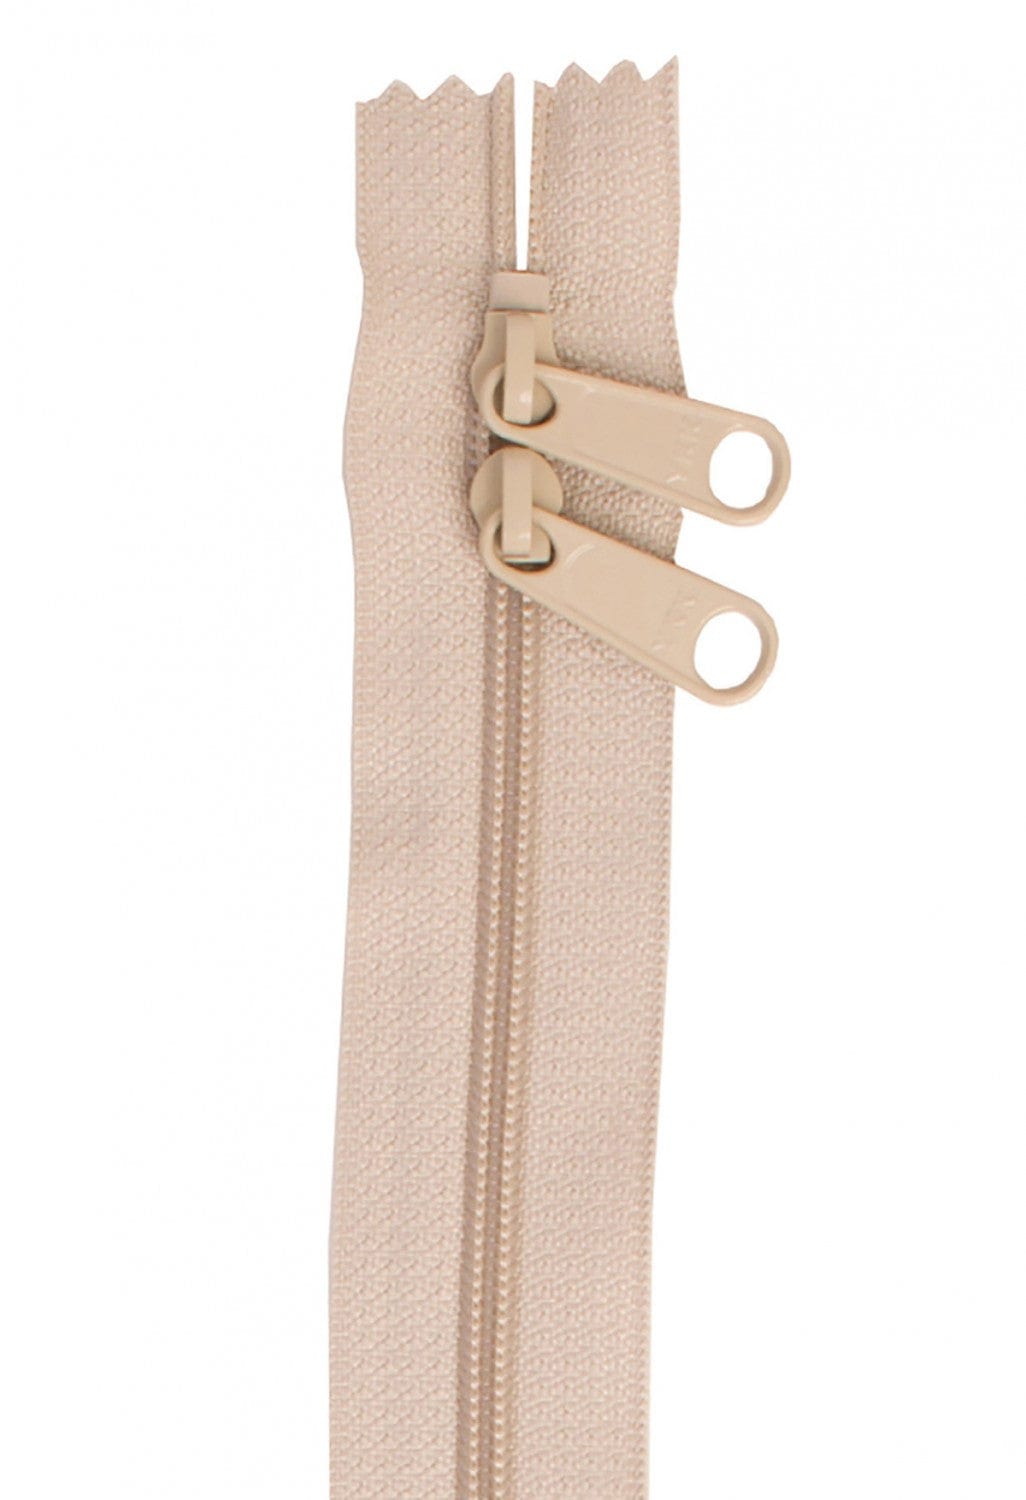 30" Long Double Slide Handbag Zipper in Natural